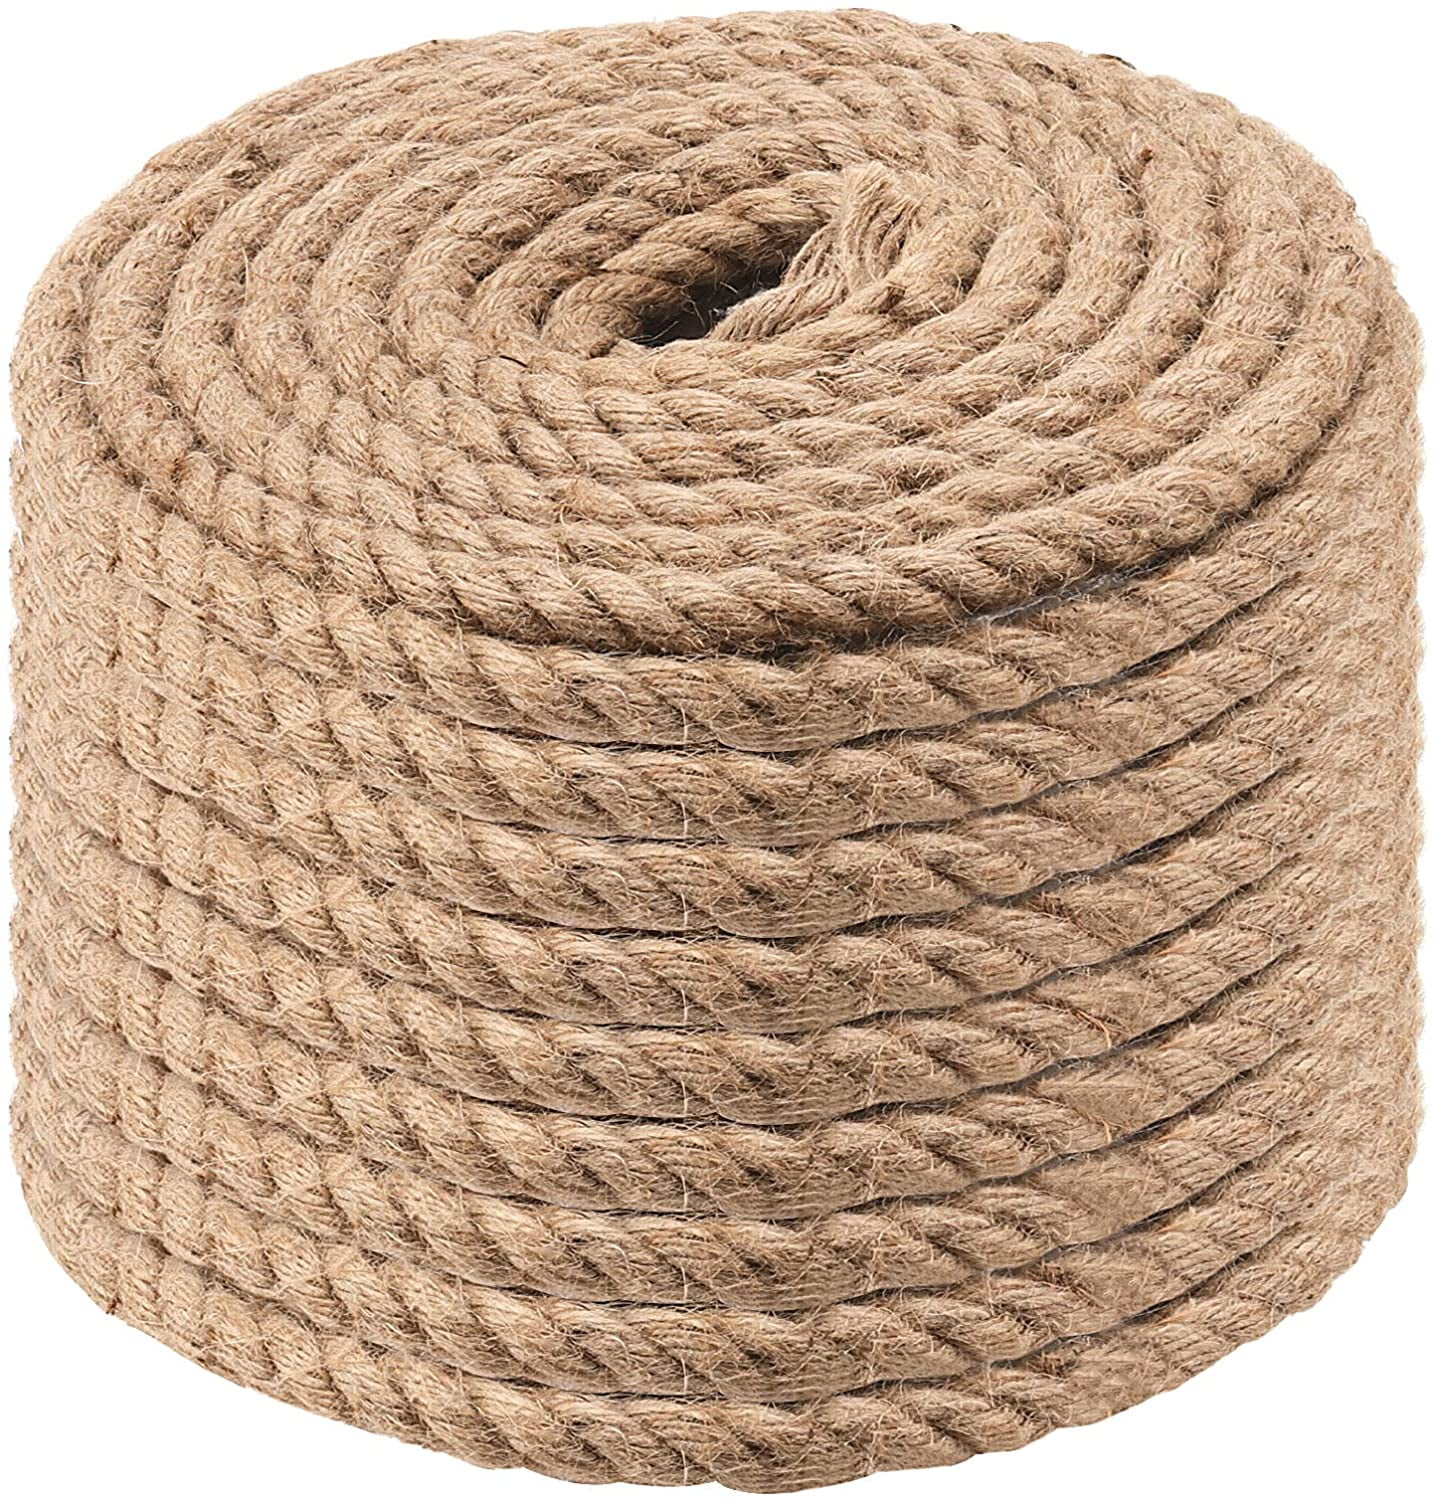 ZEONHAK 1/2 Inch Burlap Jute Twine Rope, Extra Thick Twisted Manila Hemp  Rope In Brown Tone, 100 Feet Long